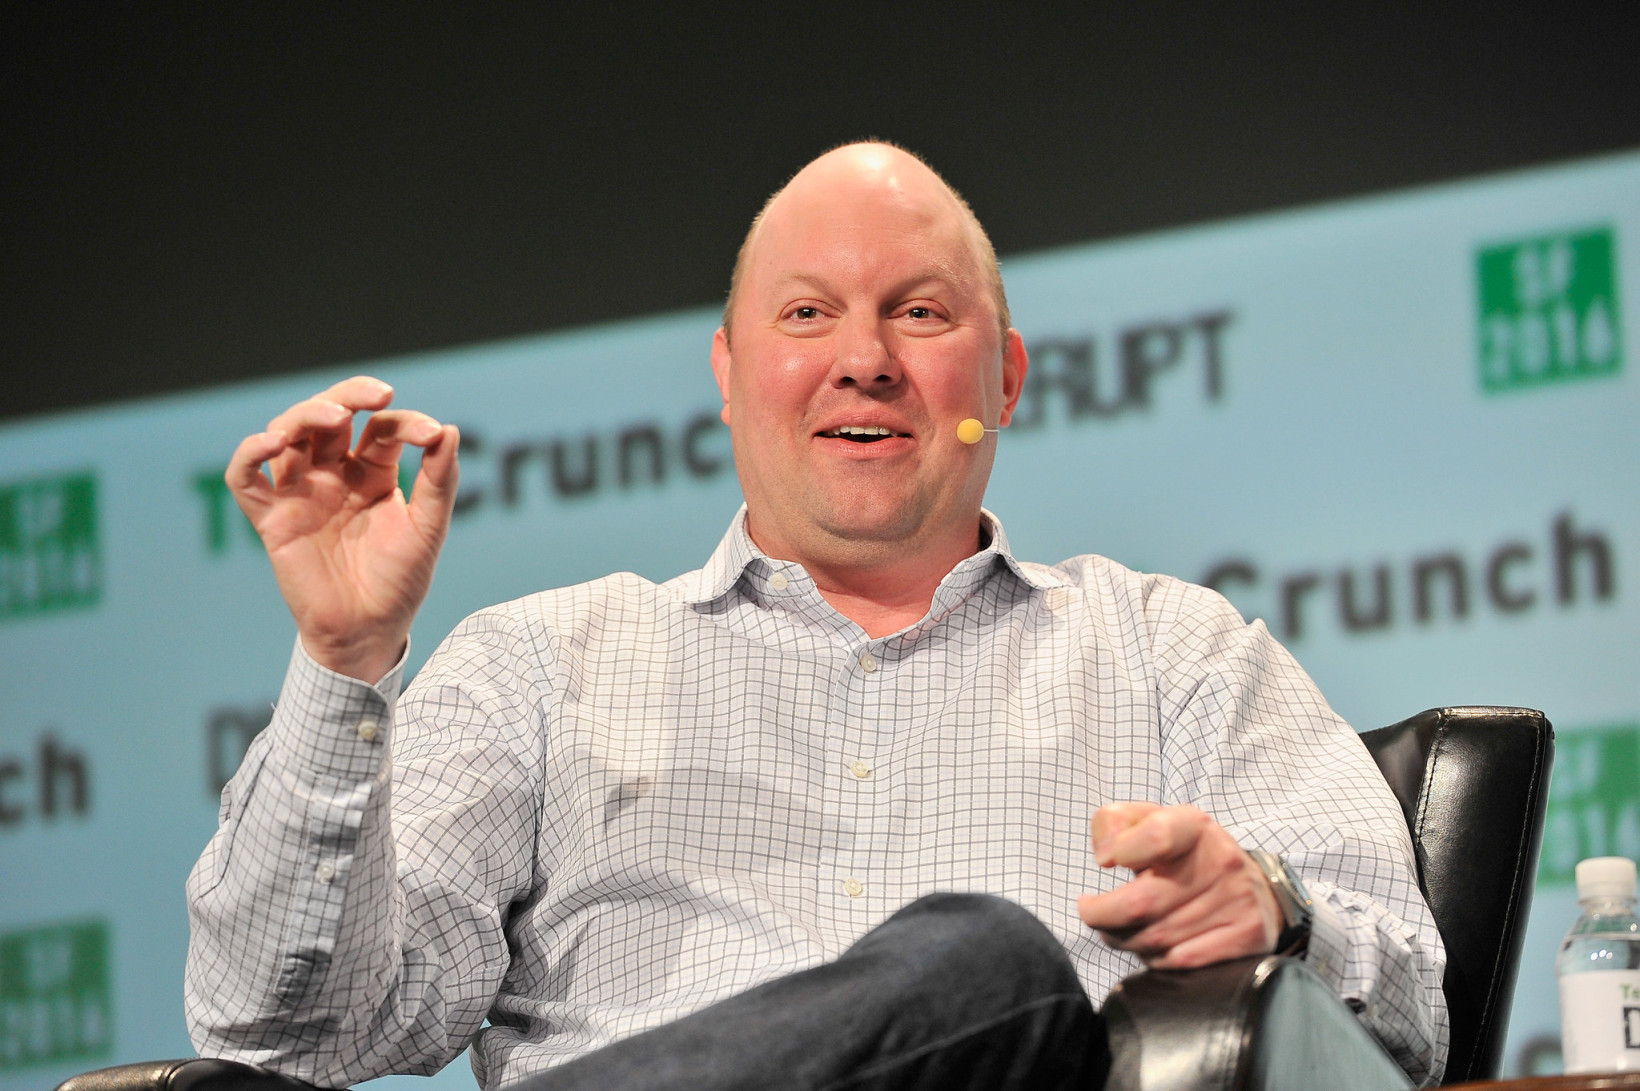 Entrepreneur Marc Andreessen speaks onstage during TechCrunch Disrupt SF 2016